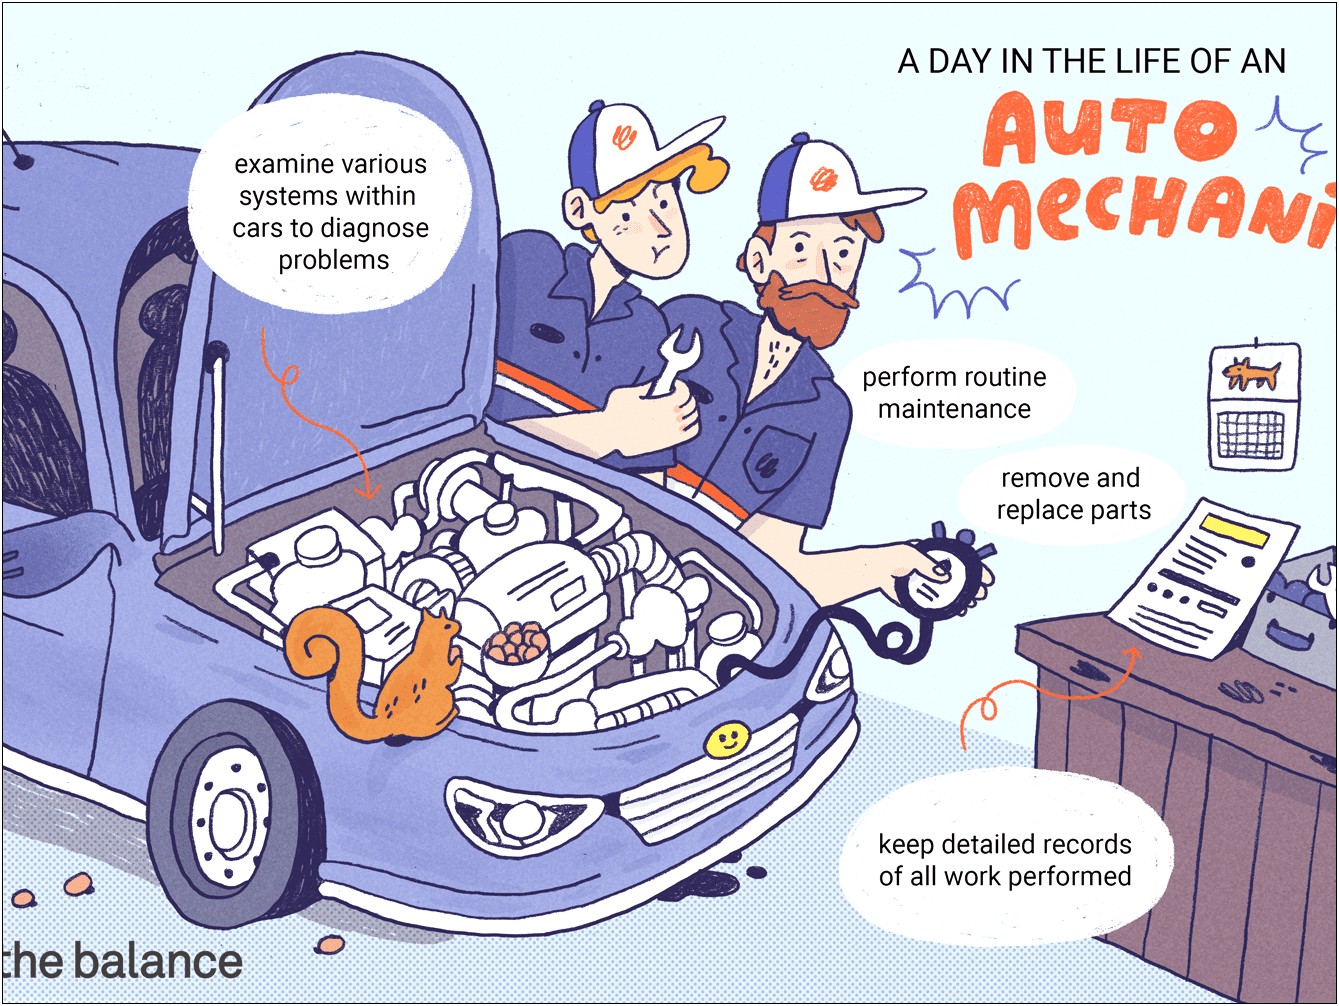 Auto Mechanic Skills And Abilities Resume